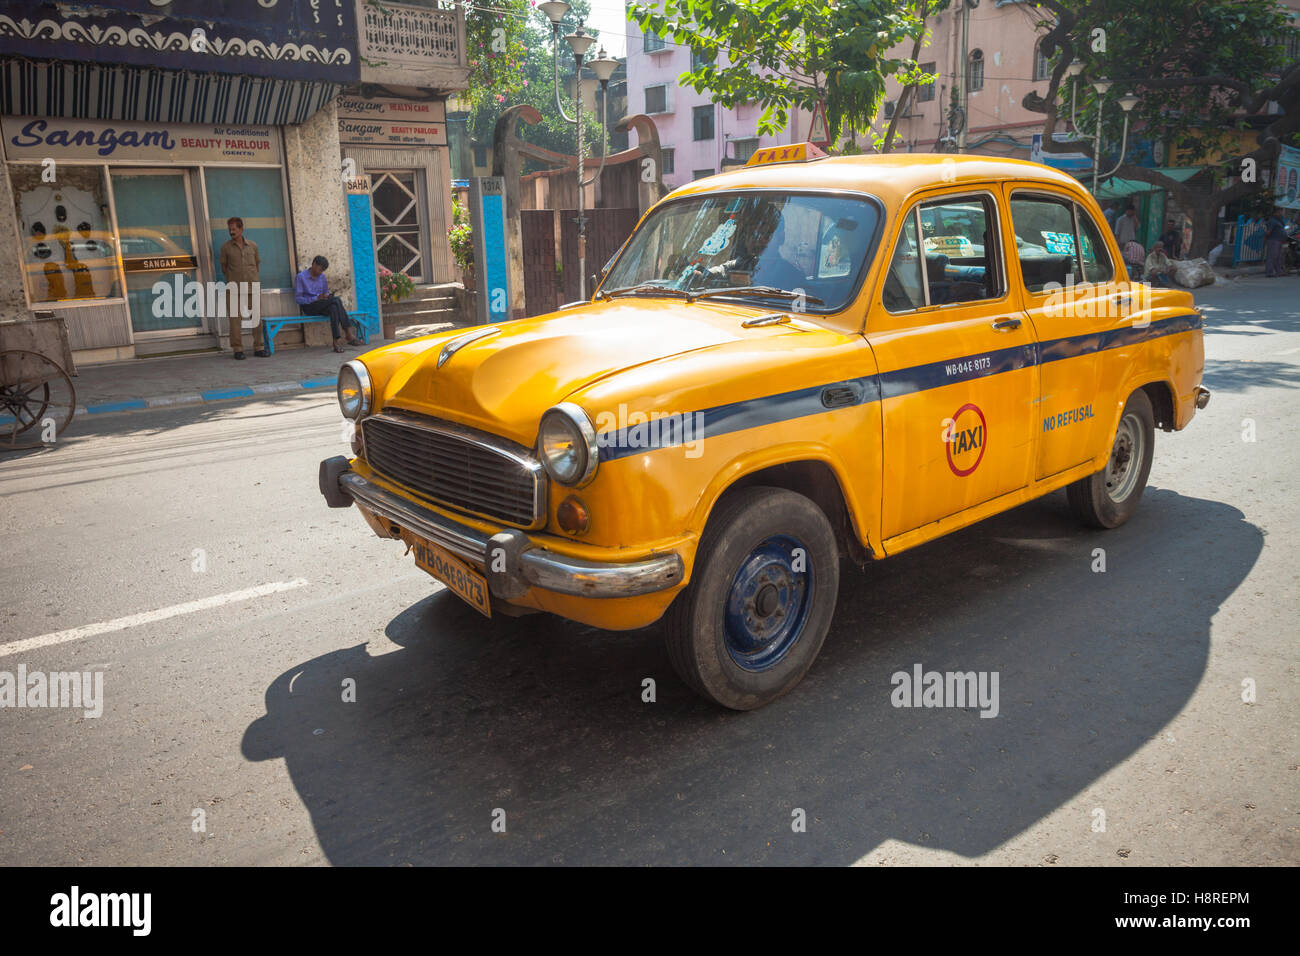 Yellow taxi cab in Kolkata (Calcutta) India Stock Photo